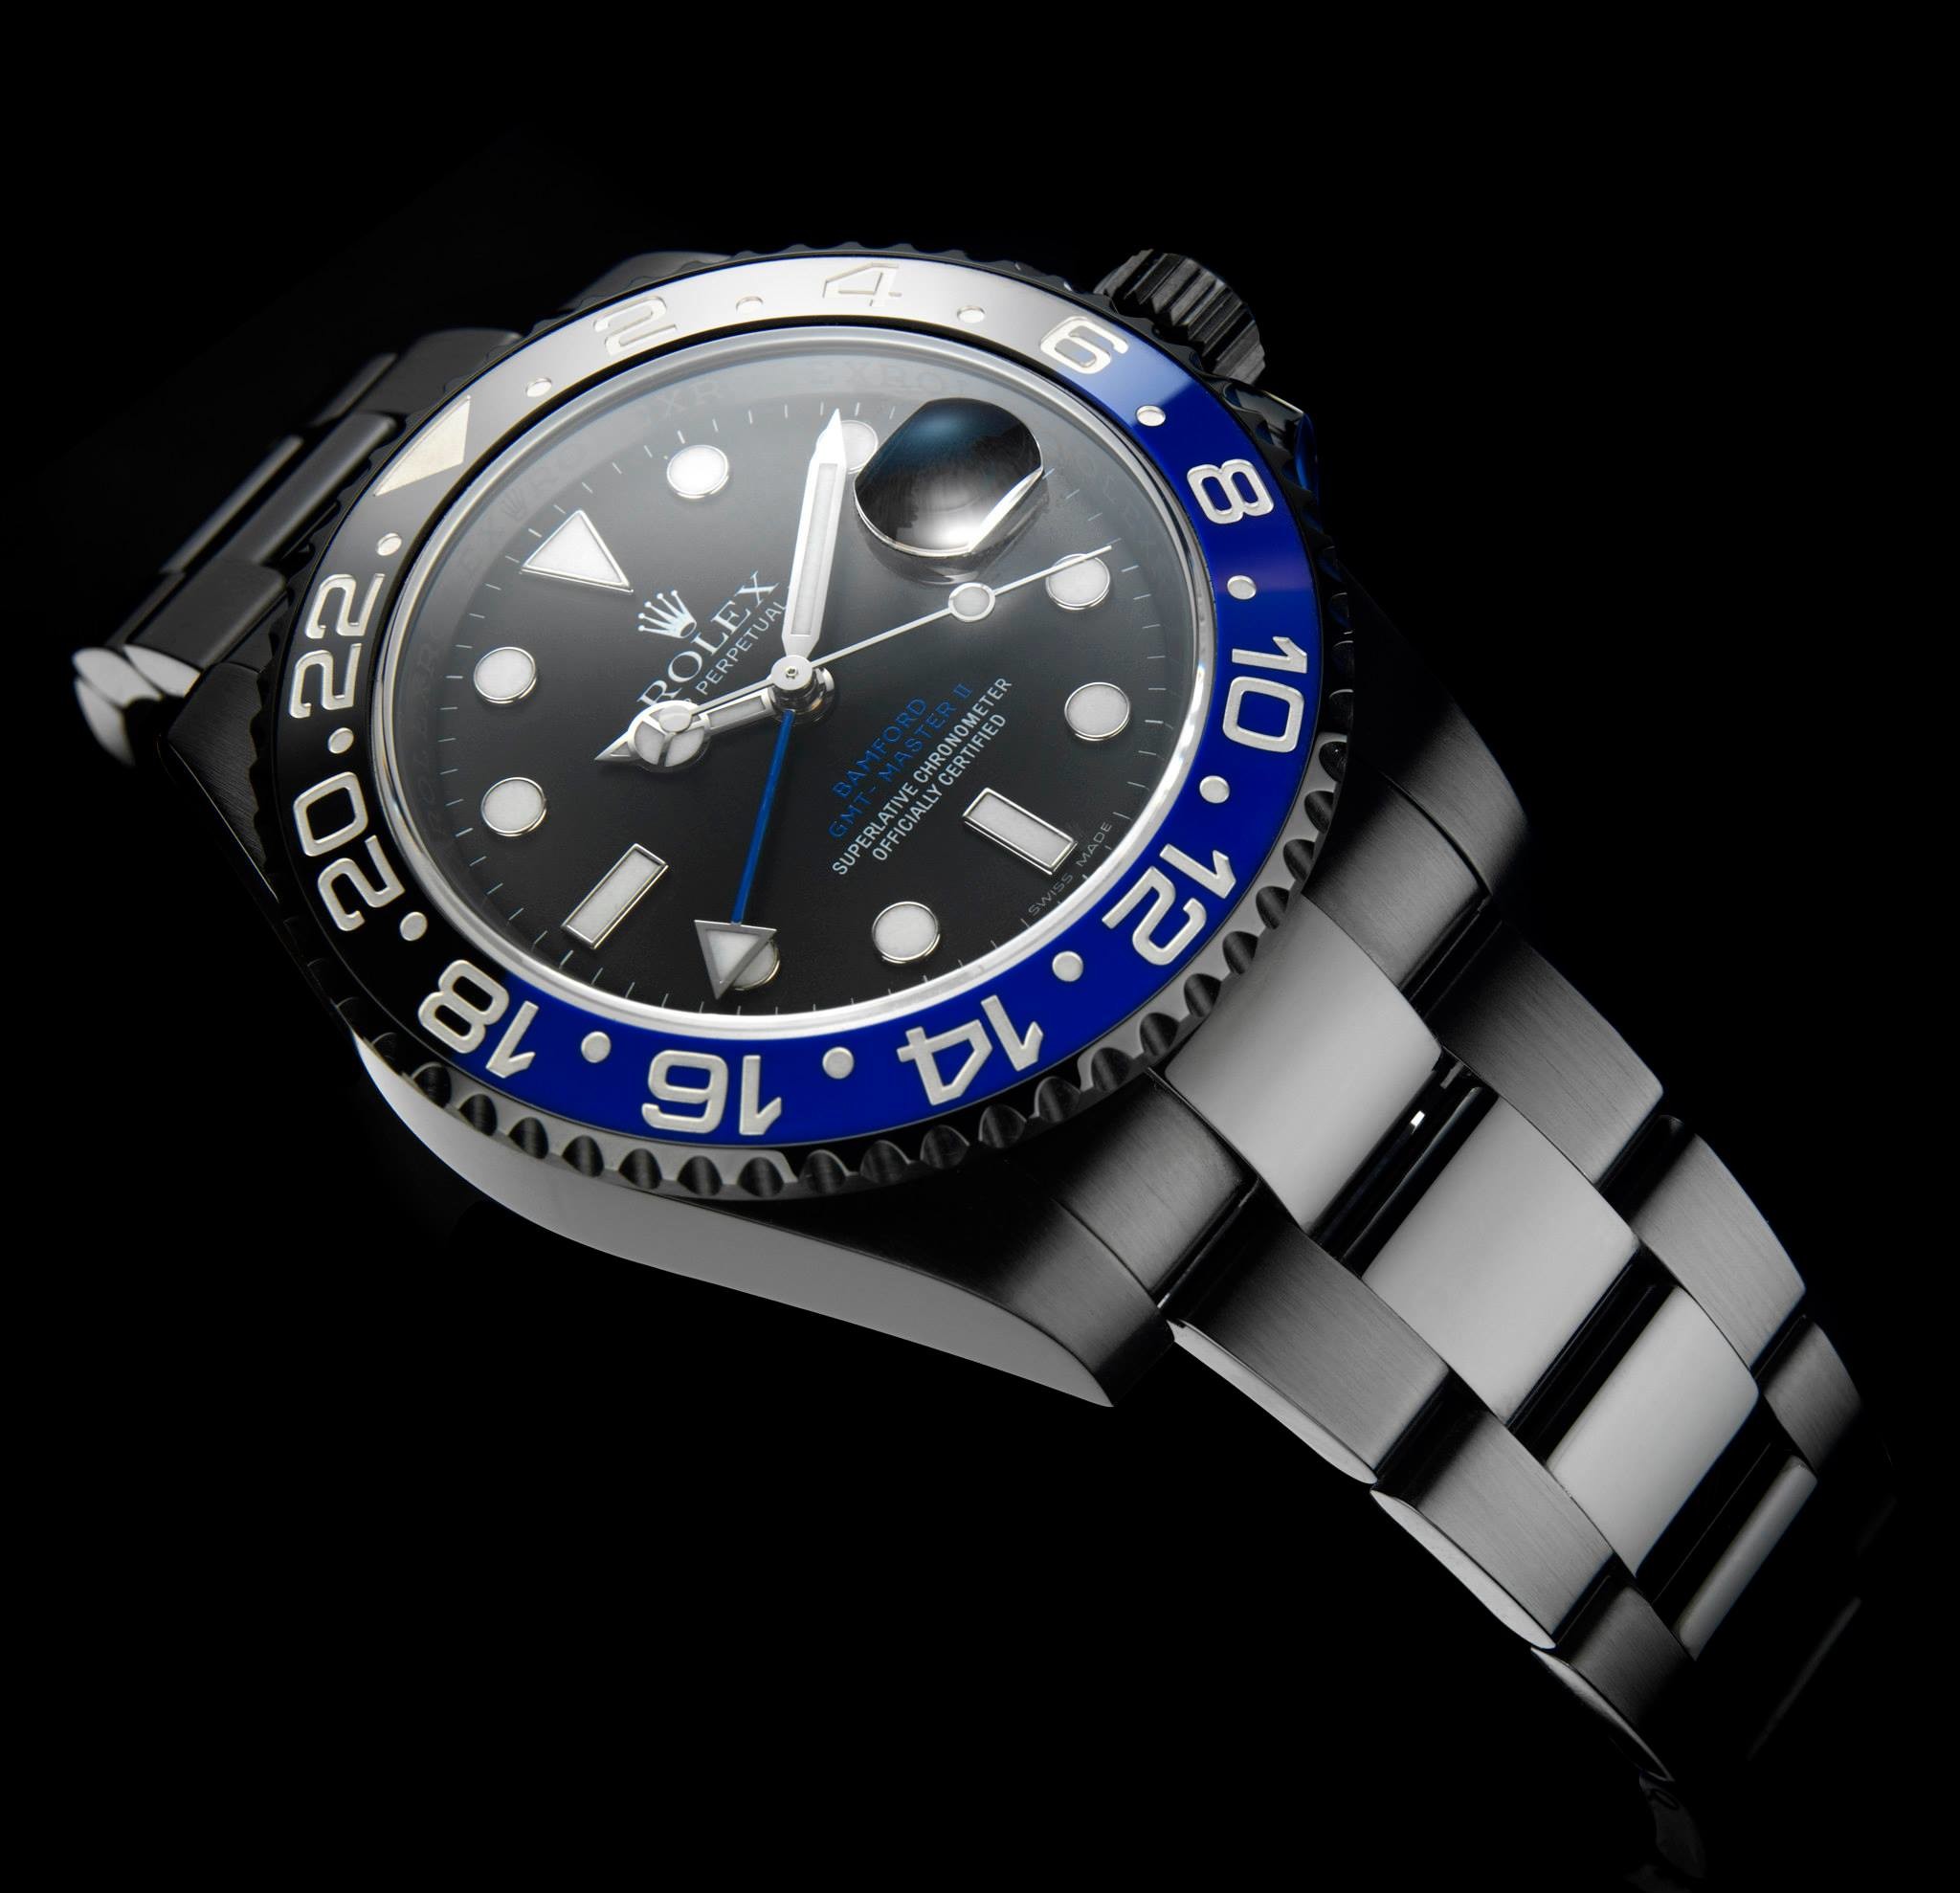 rolex watch live wallpaper,watch,analog watch,watch accessory,blue,fashion accessory